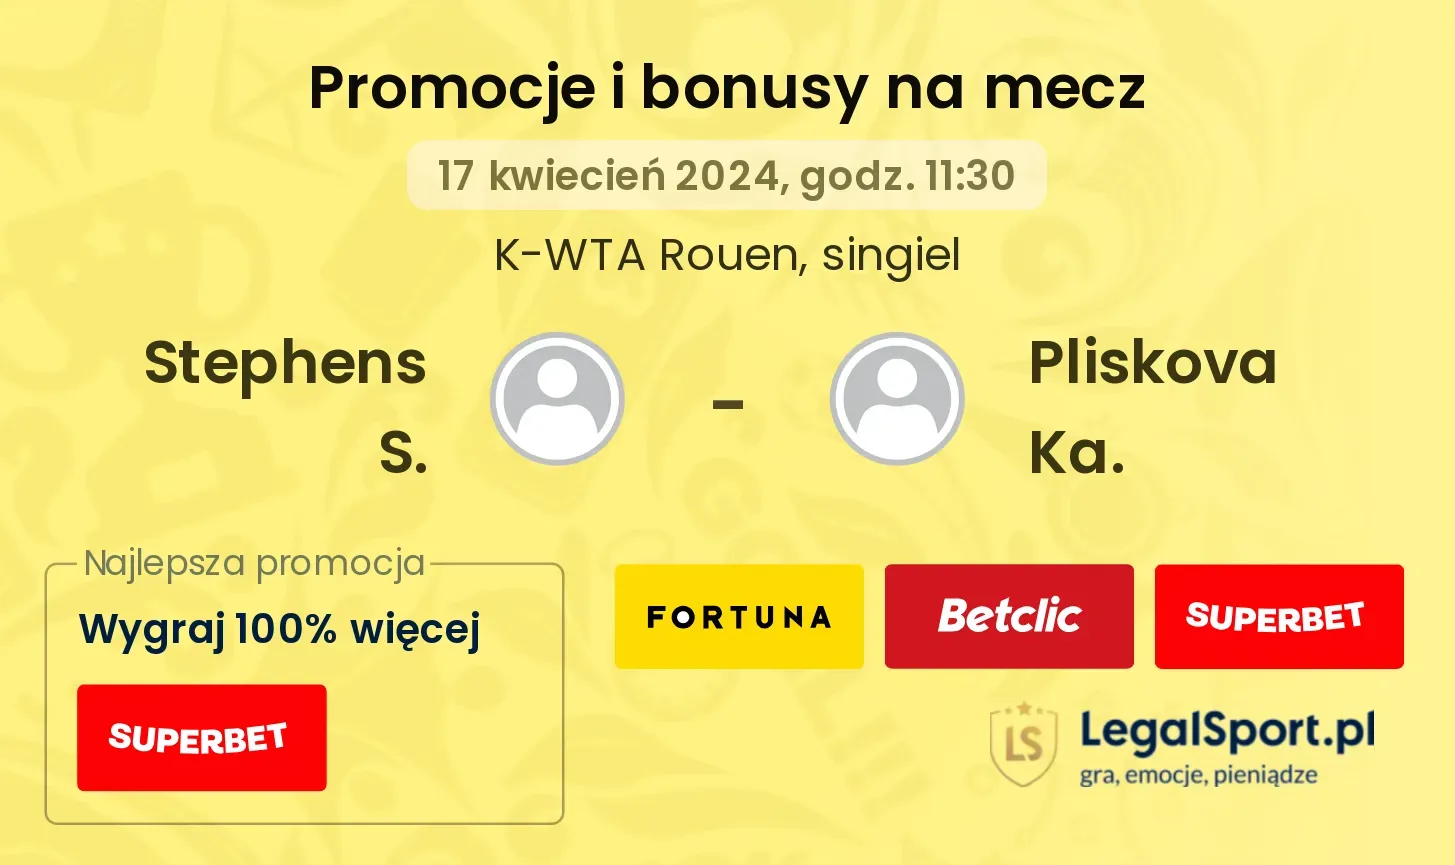 Stephens S. - Pliskova Ka. promocje bonusy na mecz